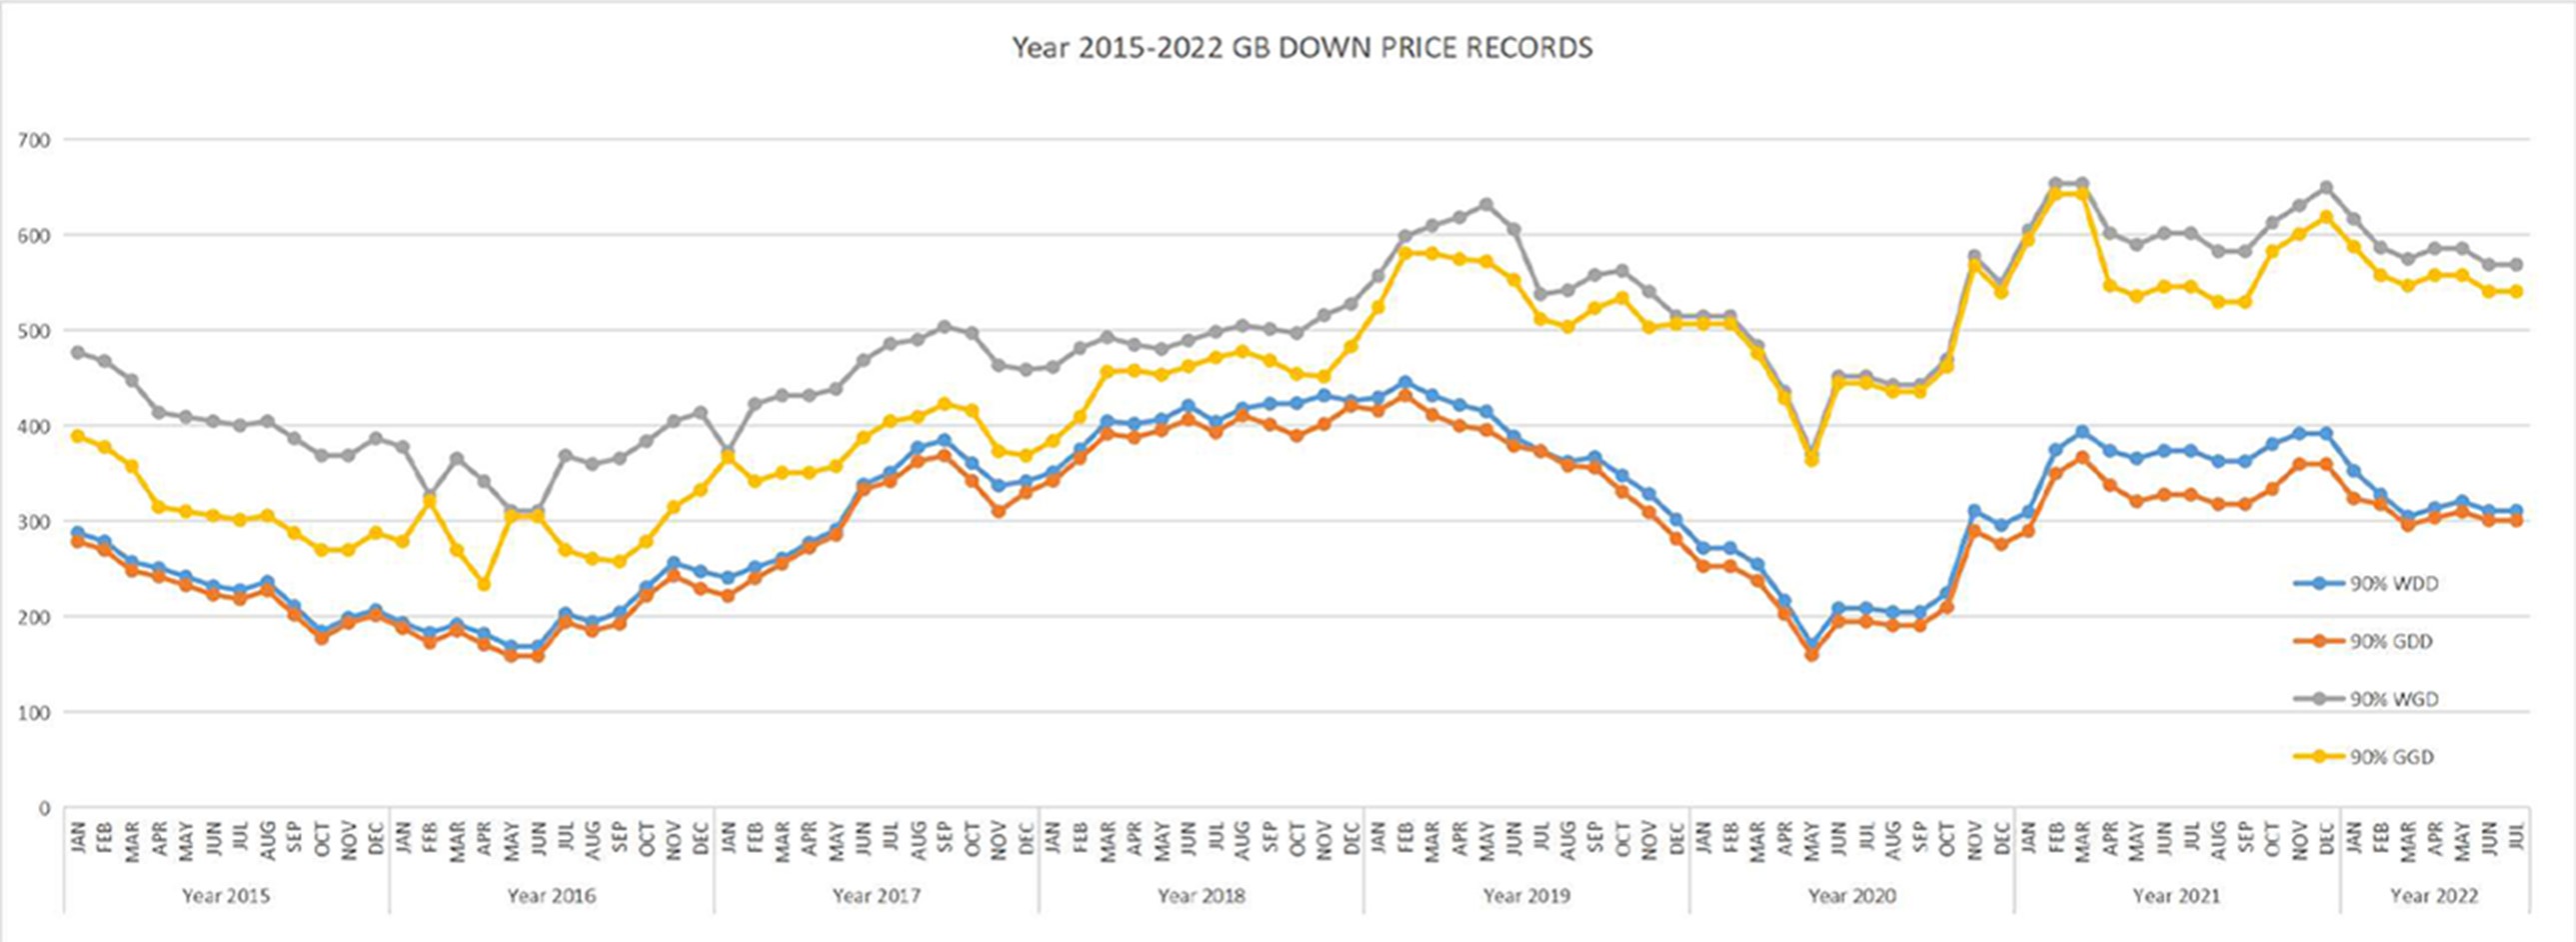 2015-2022 GB DOWN PRICE RECORDS